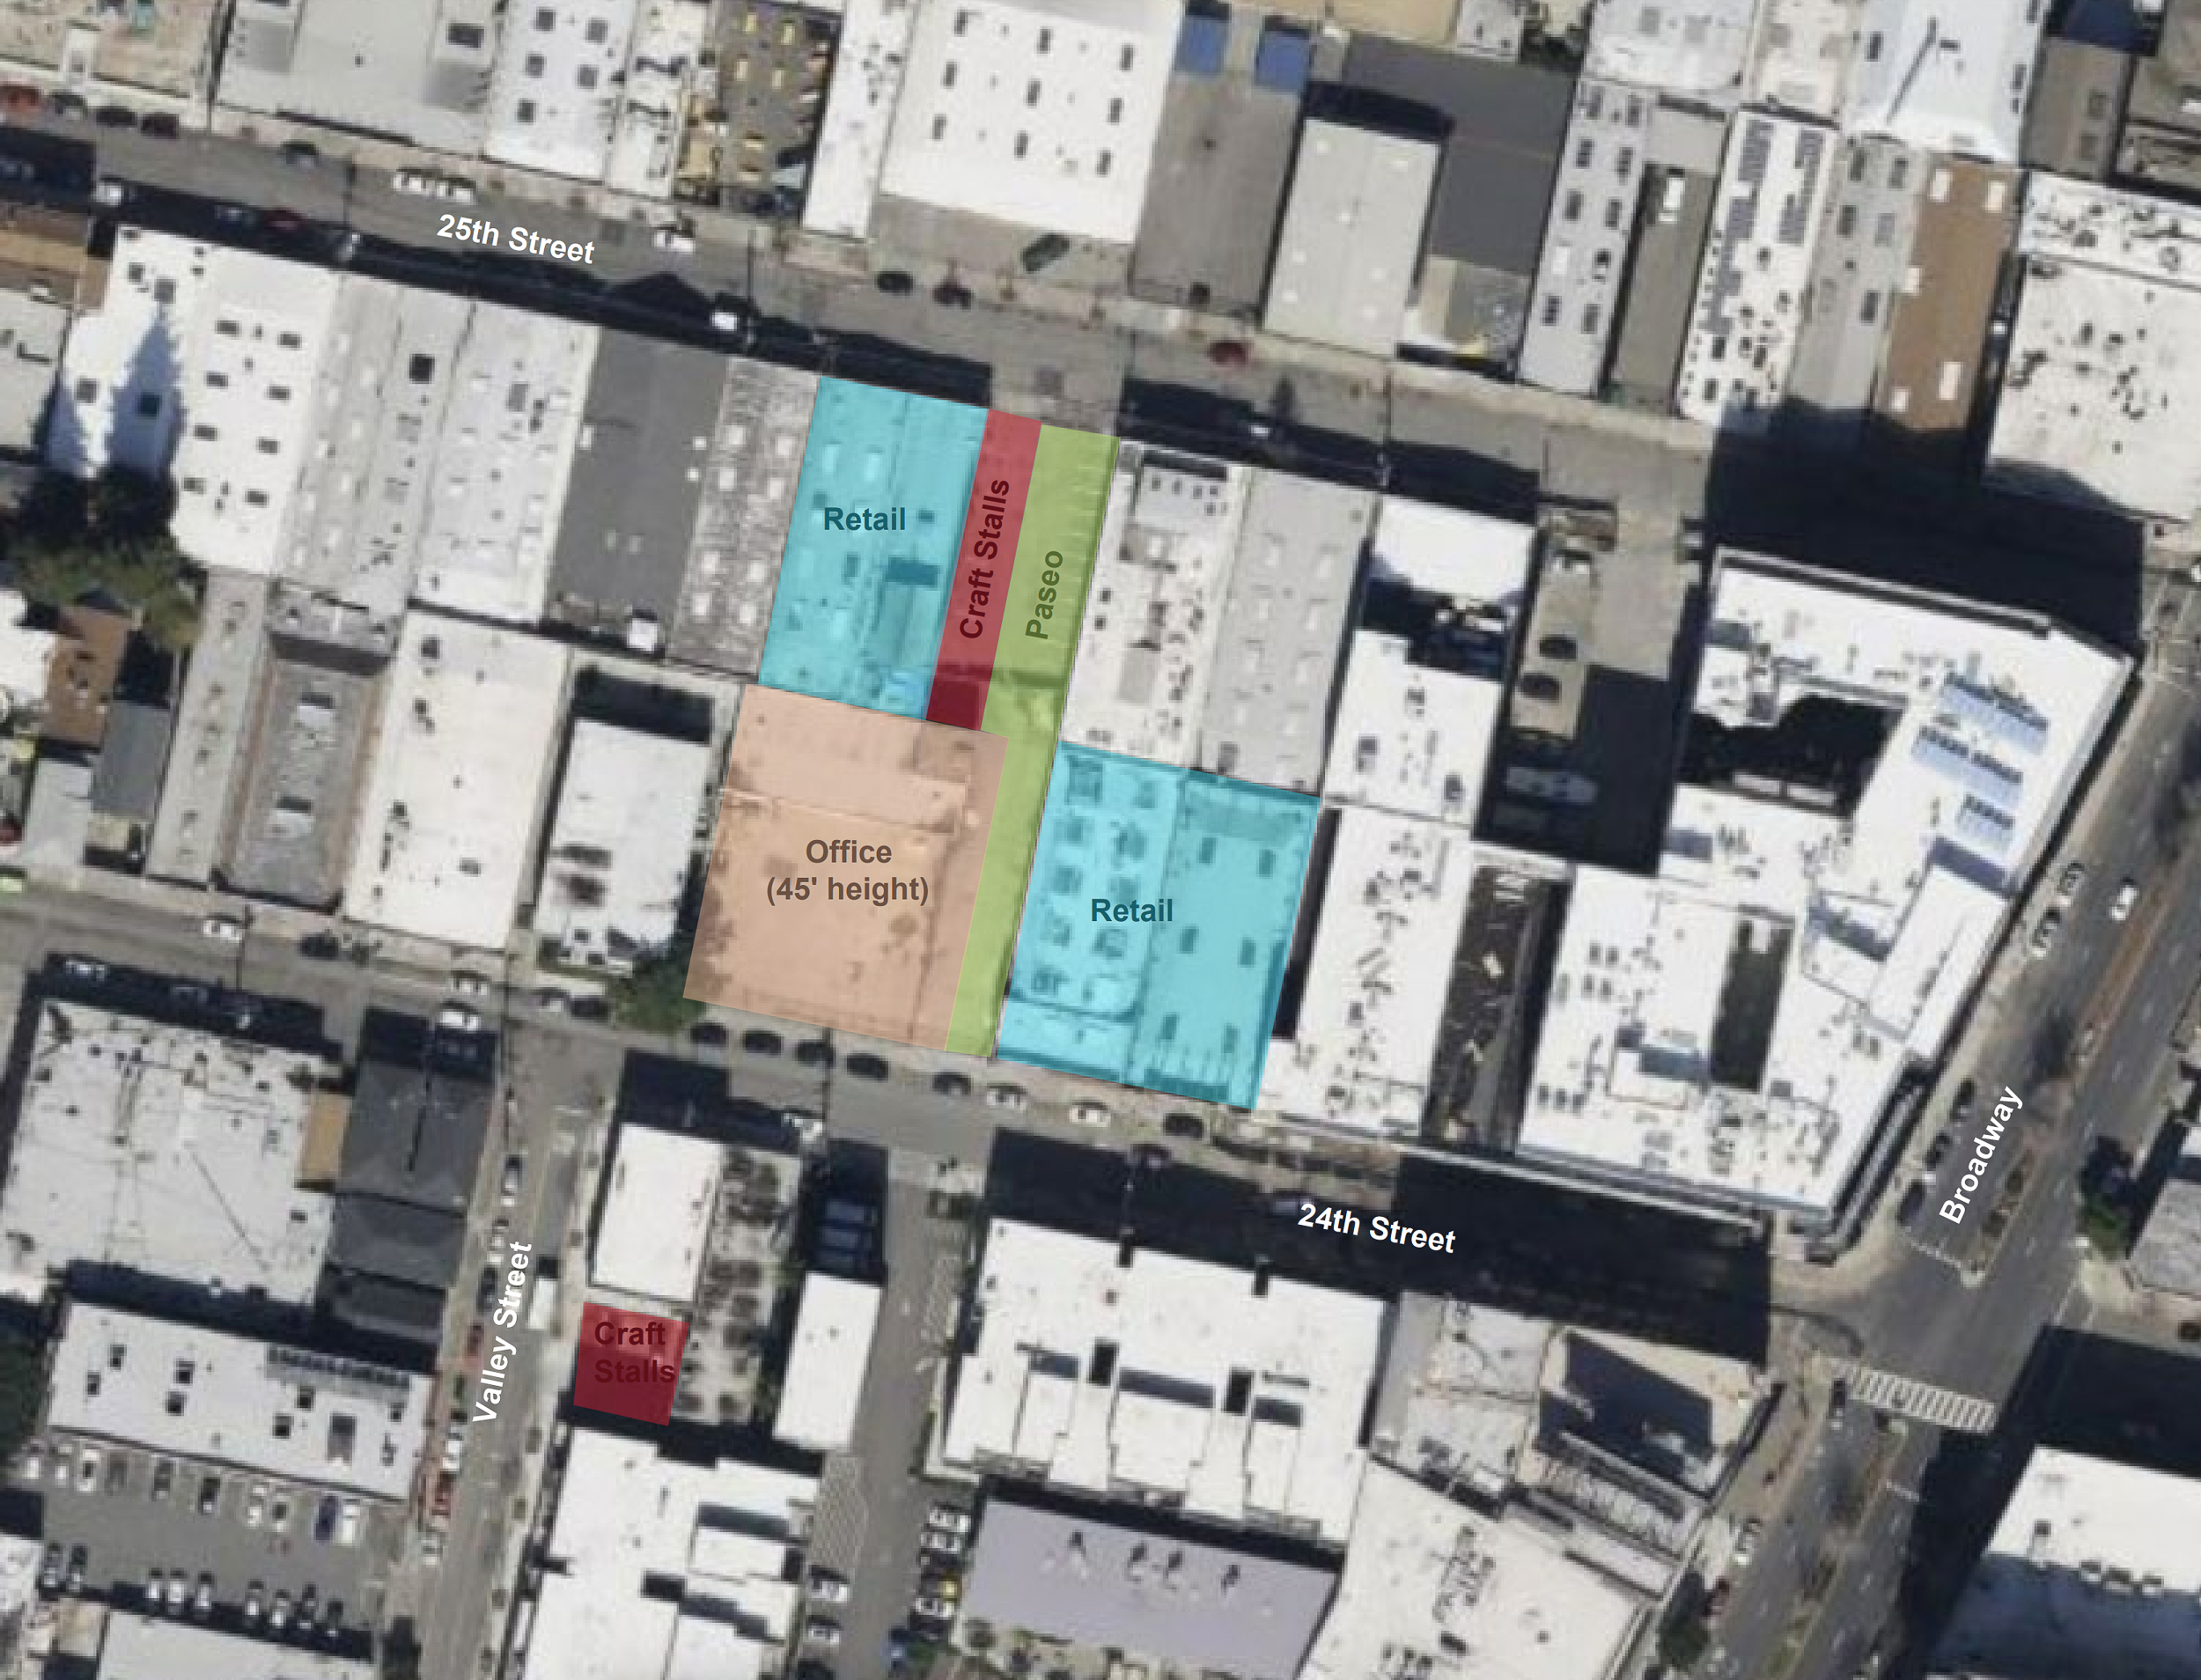 460 24th Street site map on satellite map, image courtesy Draft EIR